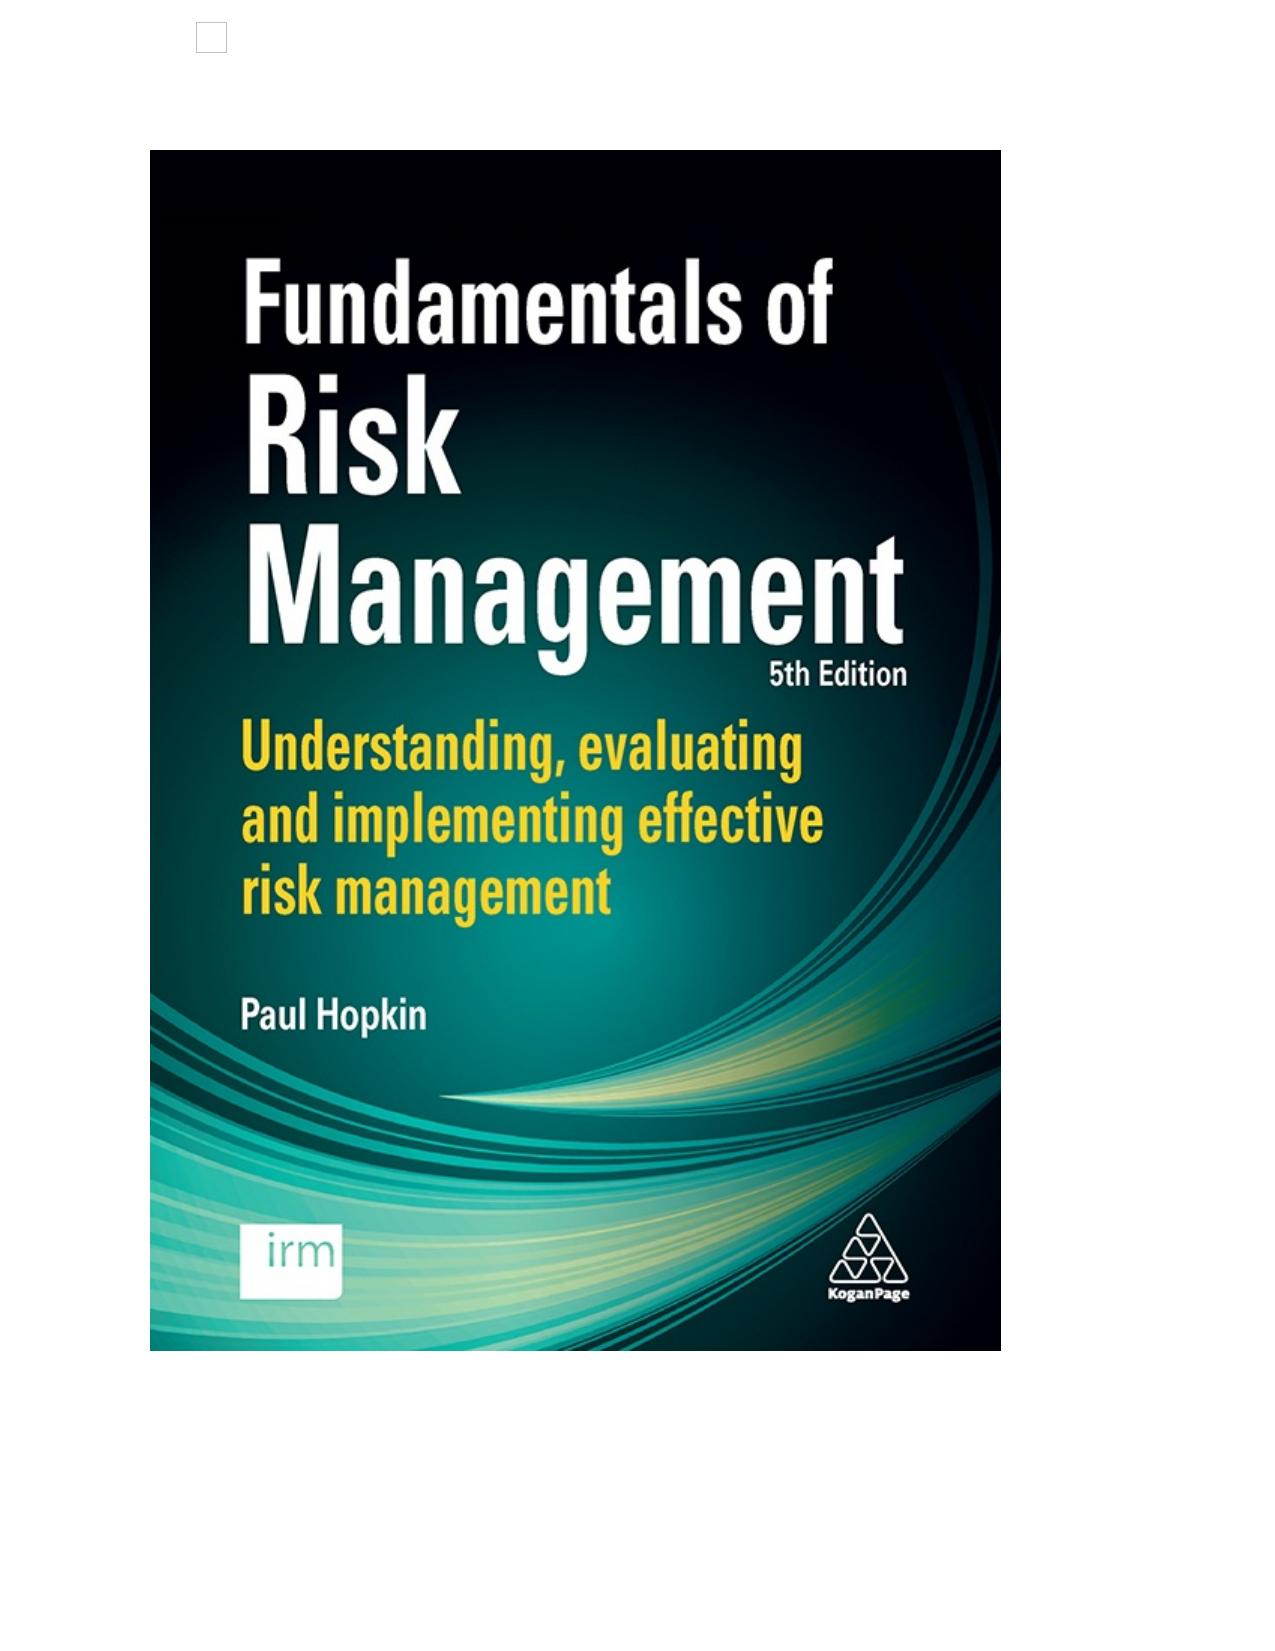 Fundamentals of risk management understanding, evaluating and implementing effective risk management - PDFDrive.com